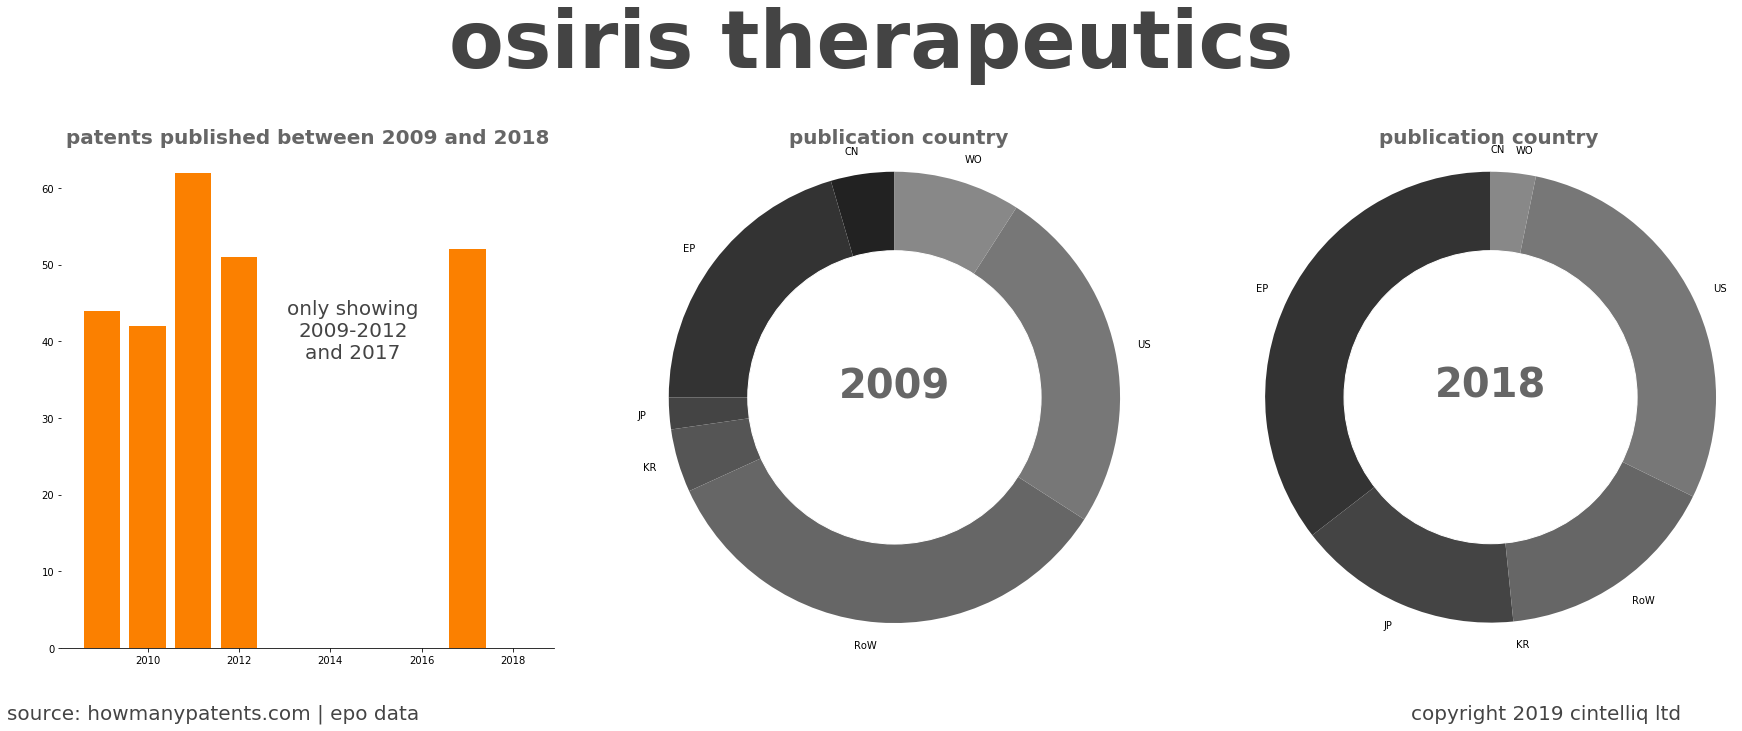 summary of patents for Osiris Therapeutics